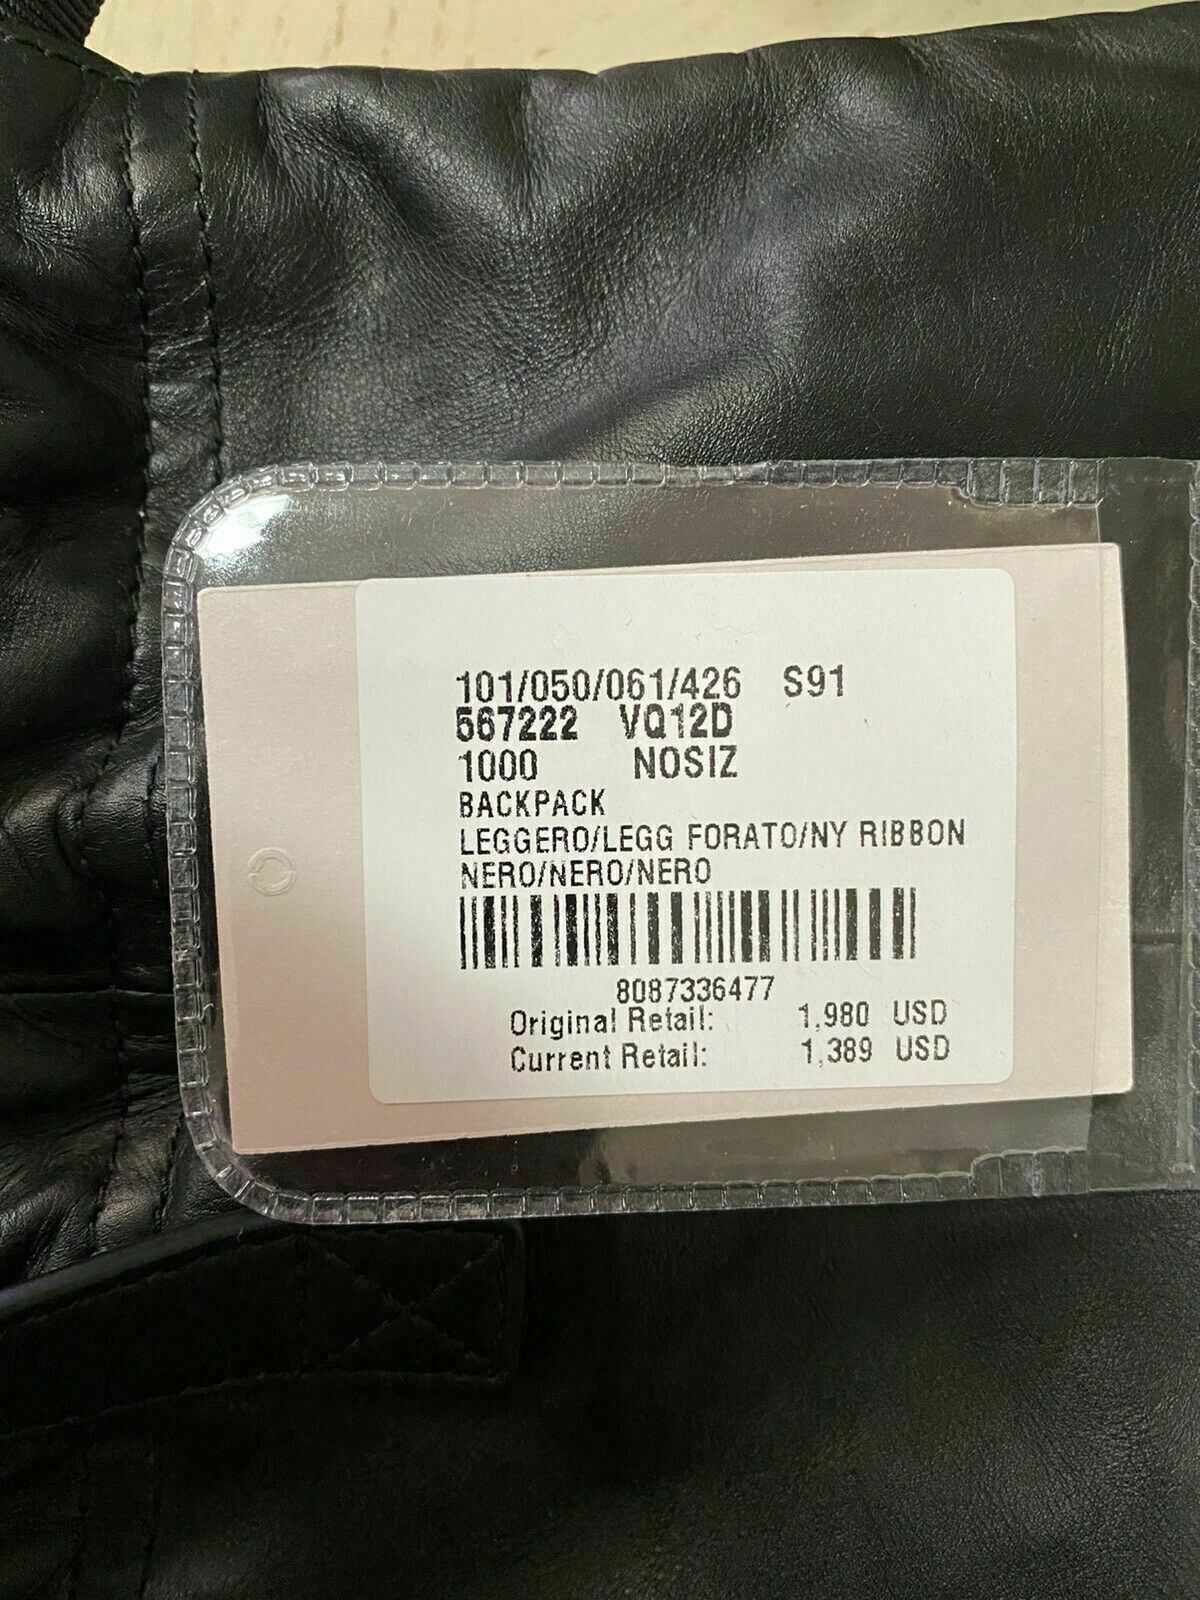 NWT $1980 Bottega Veneta Leather Backpack Black Made in Italy 567222